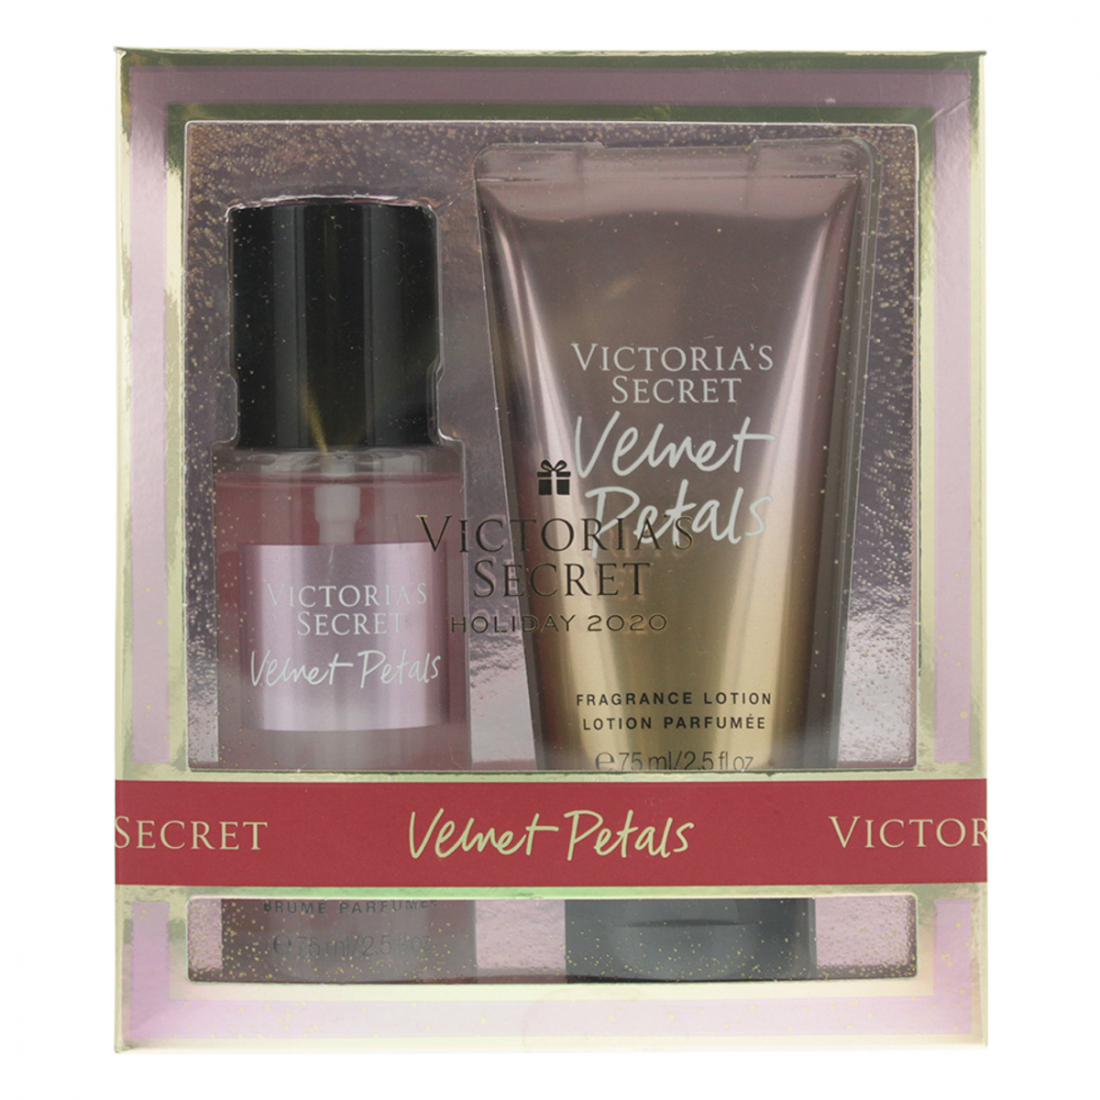 'Velvet Petals' Gift Set - 2 Pieces